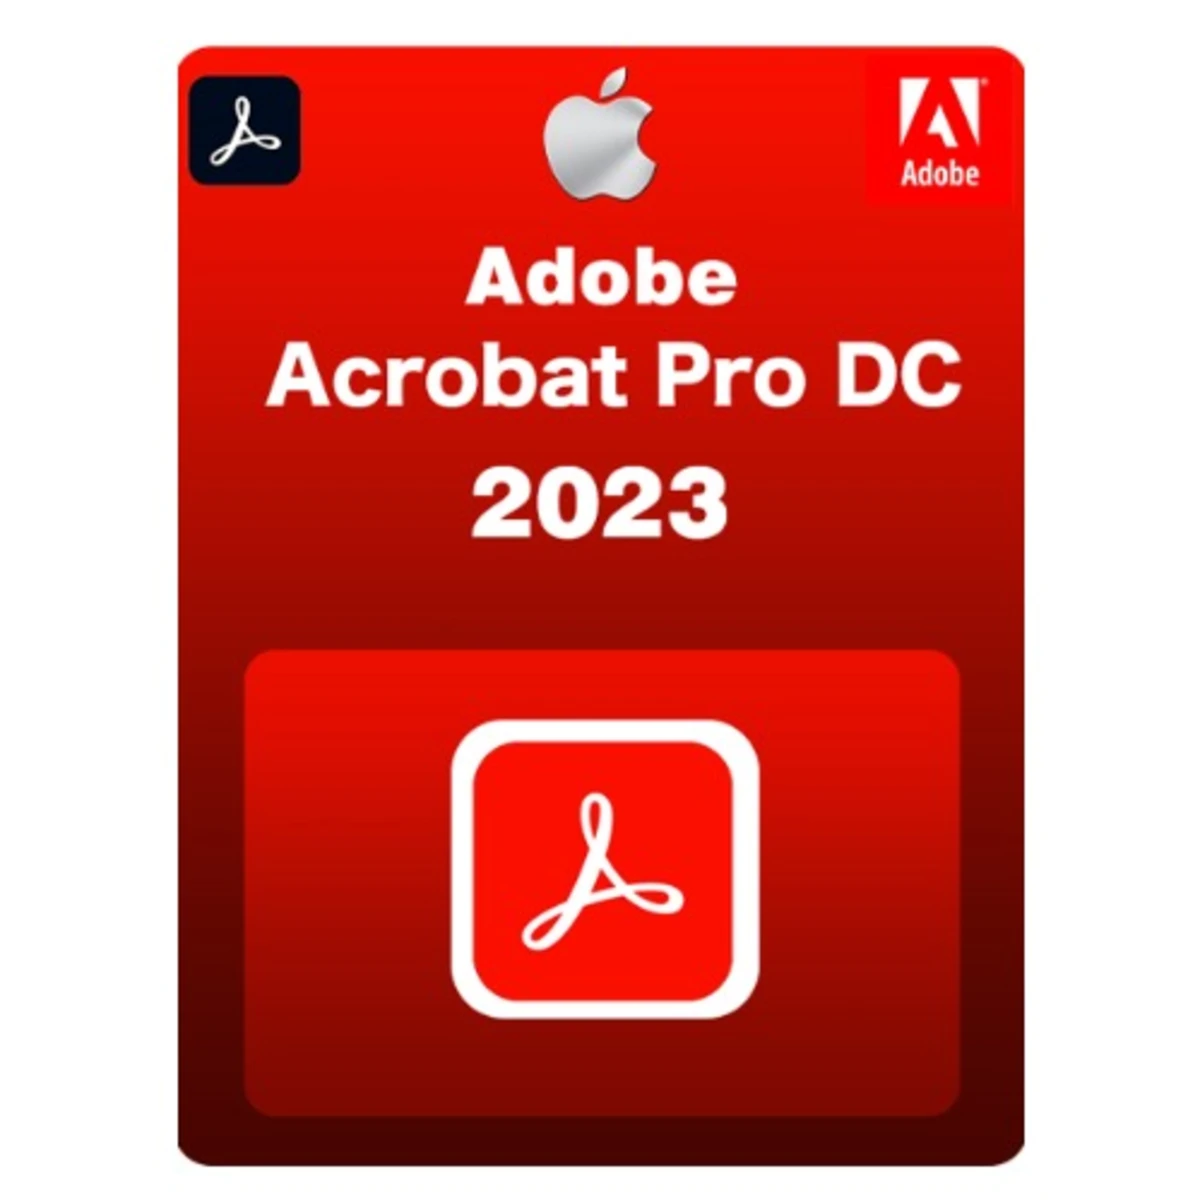 Adobe Acrobat Pro DC 2023 For Mac Free Download